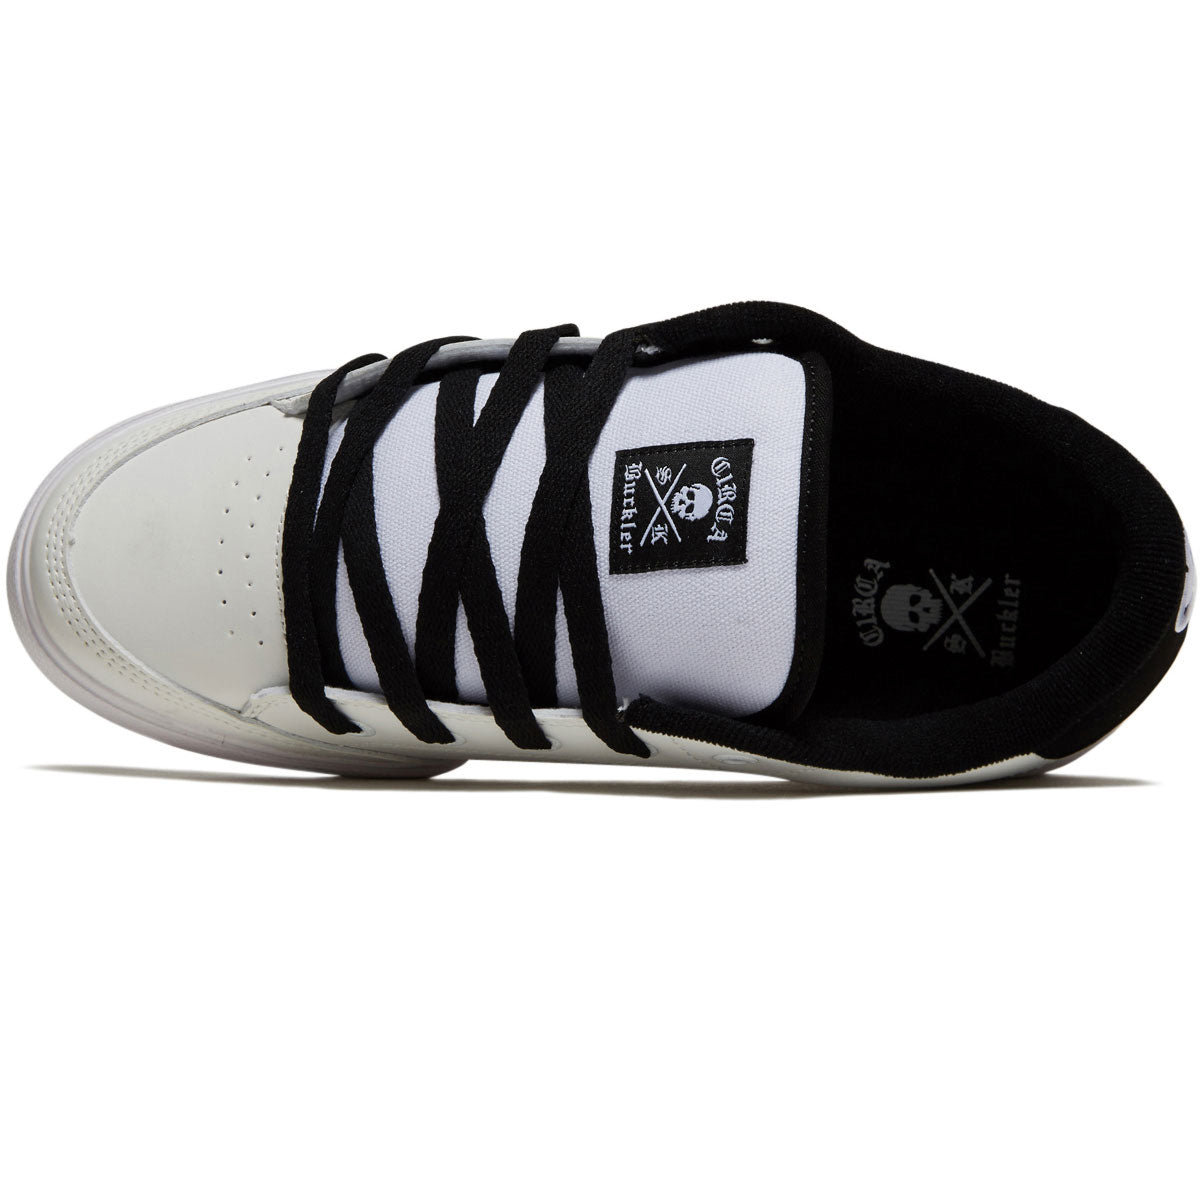 C1rca Buckler Sk Shoes - White/Black image 3